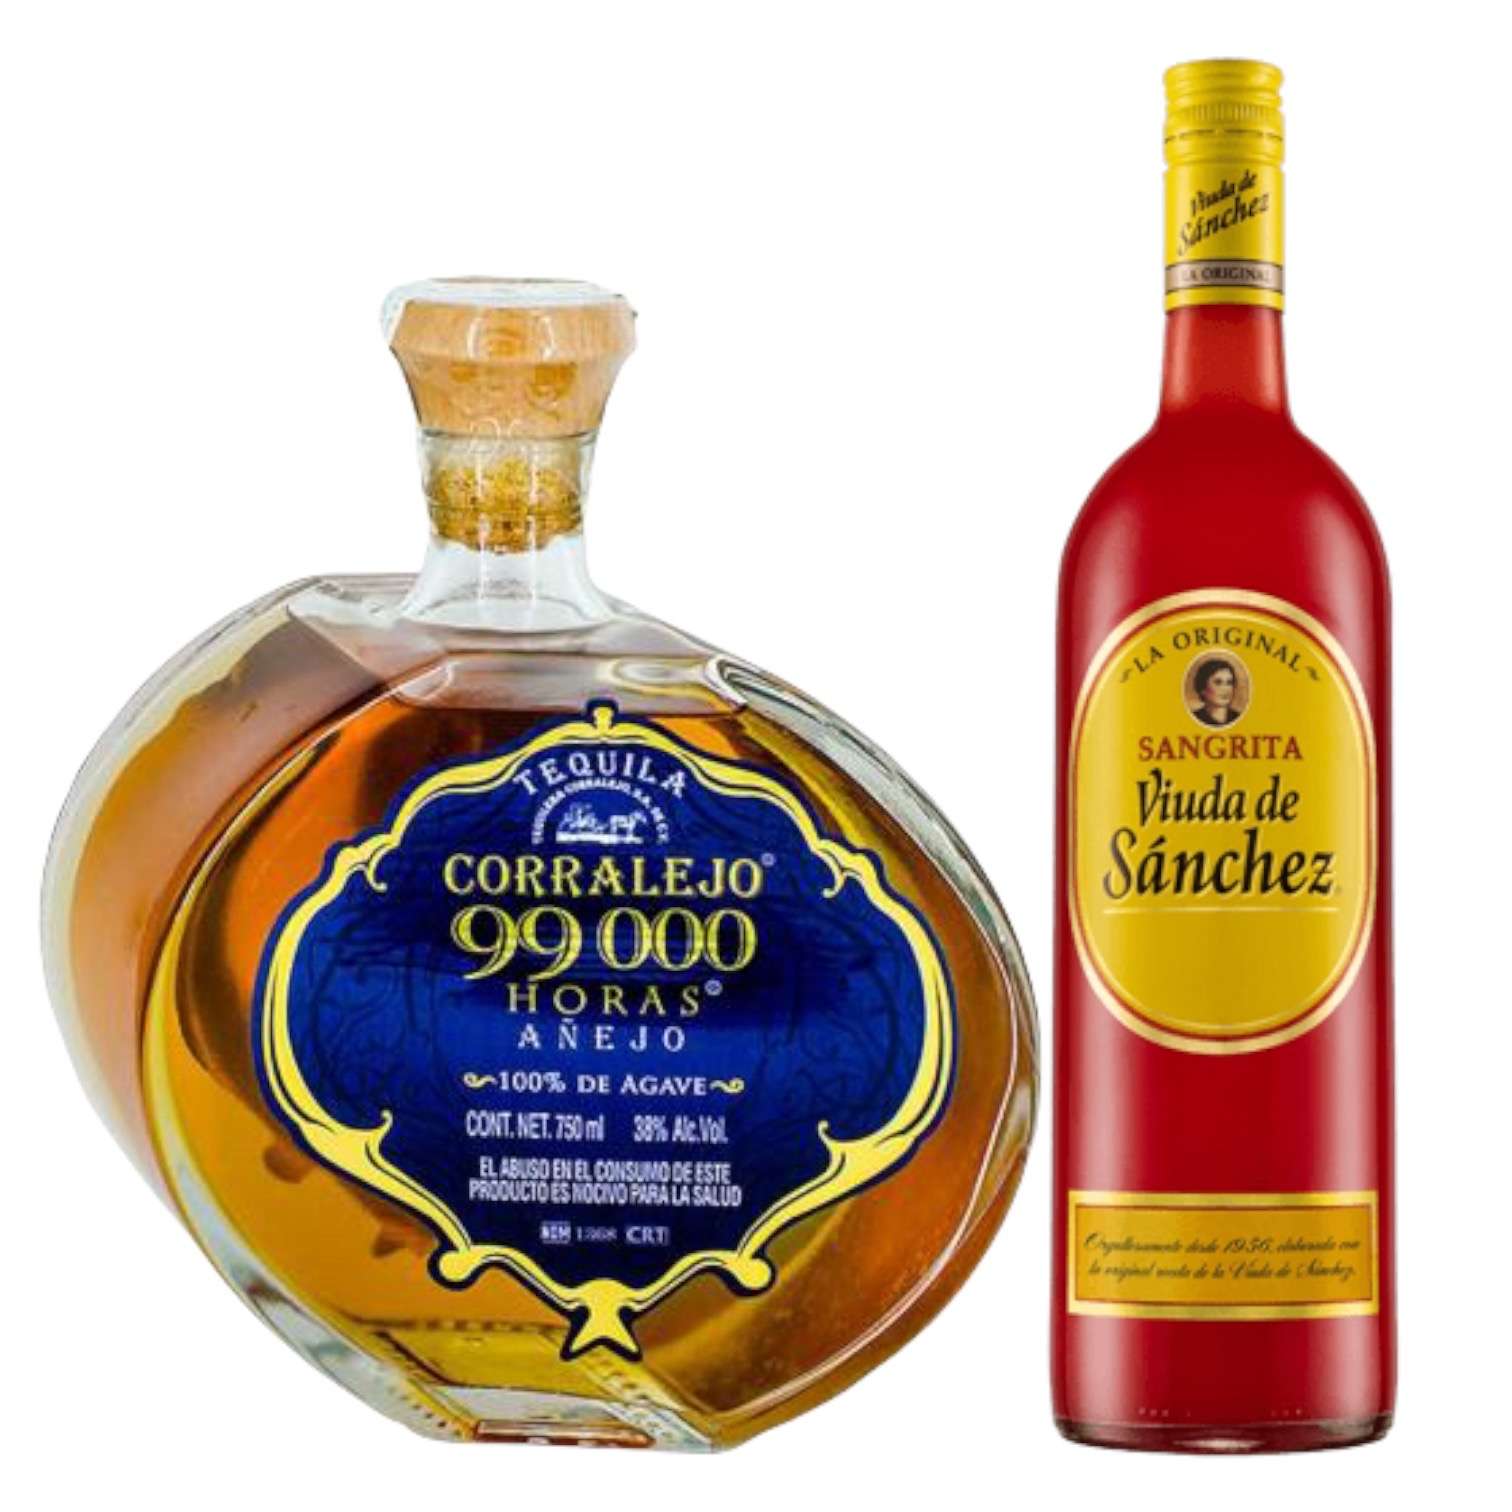 Tequila Corralejo 99,000 Horas Añejo 750 ml+ Sangrita Litro - GuateSelectos  - Guatemala